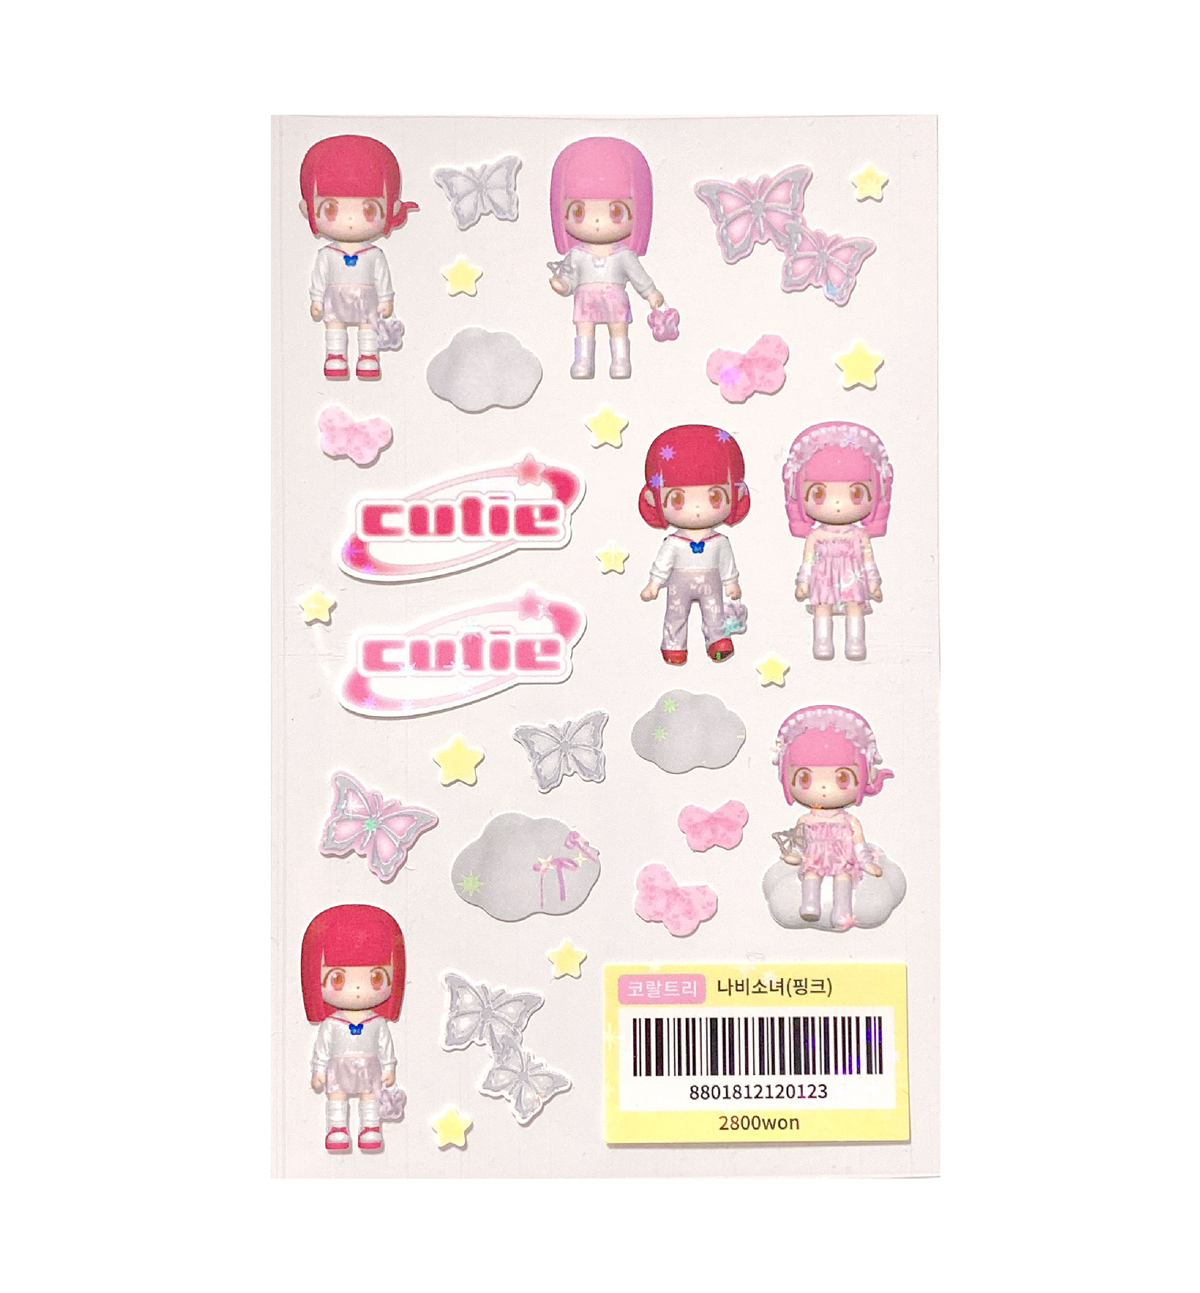 Butterfly Girl Seal Sticker [Pink]